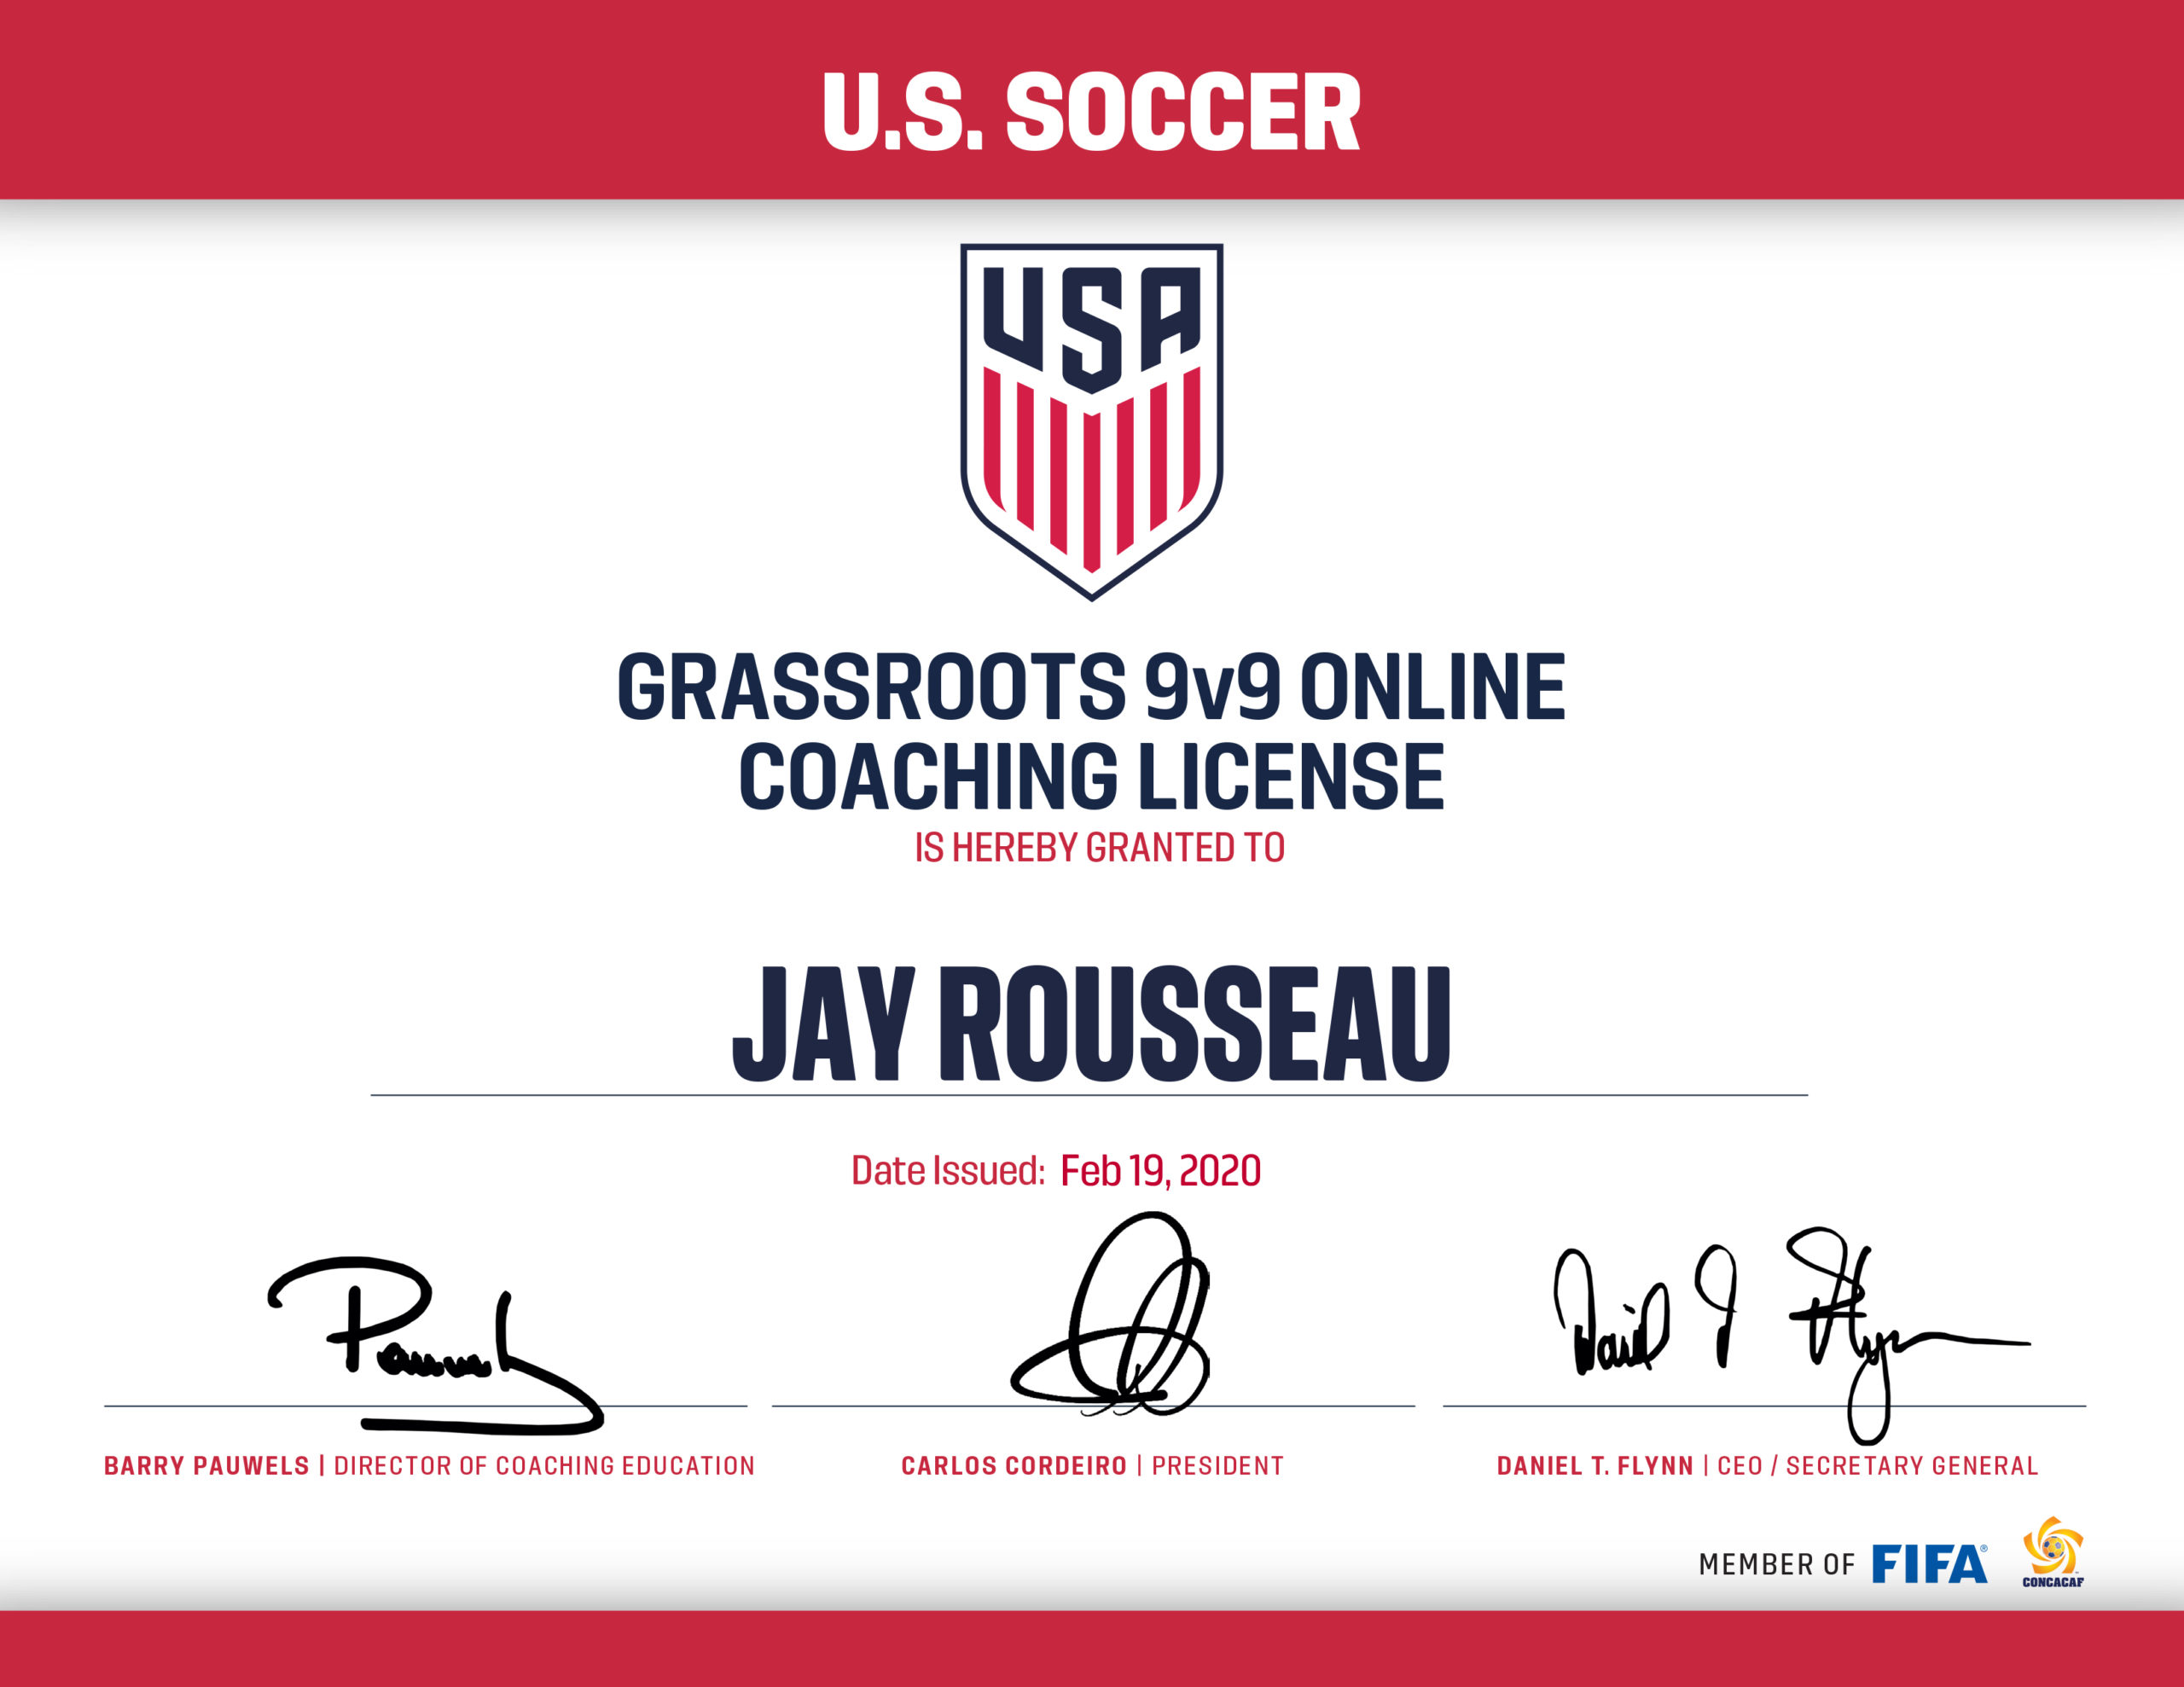 Grassroots 9v9 Coaching License